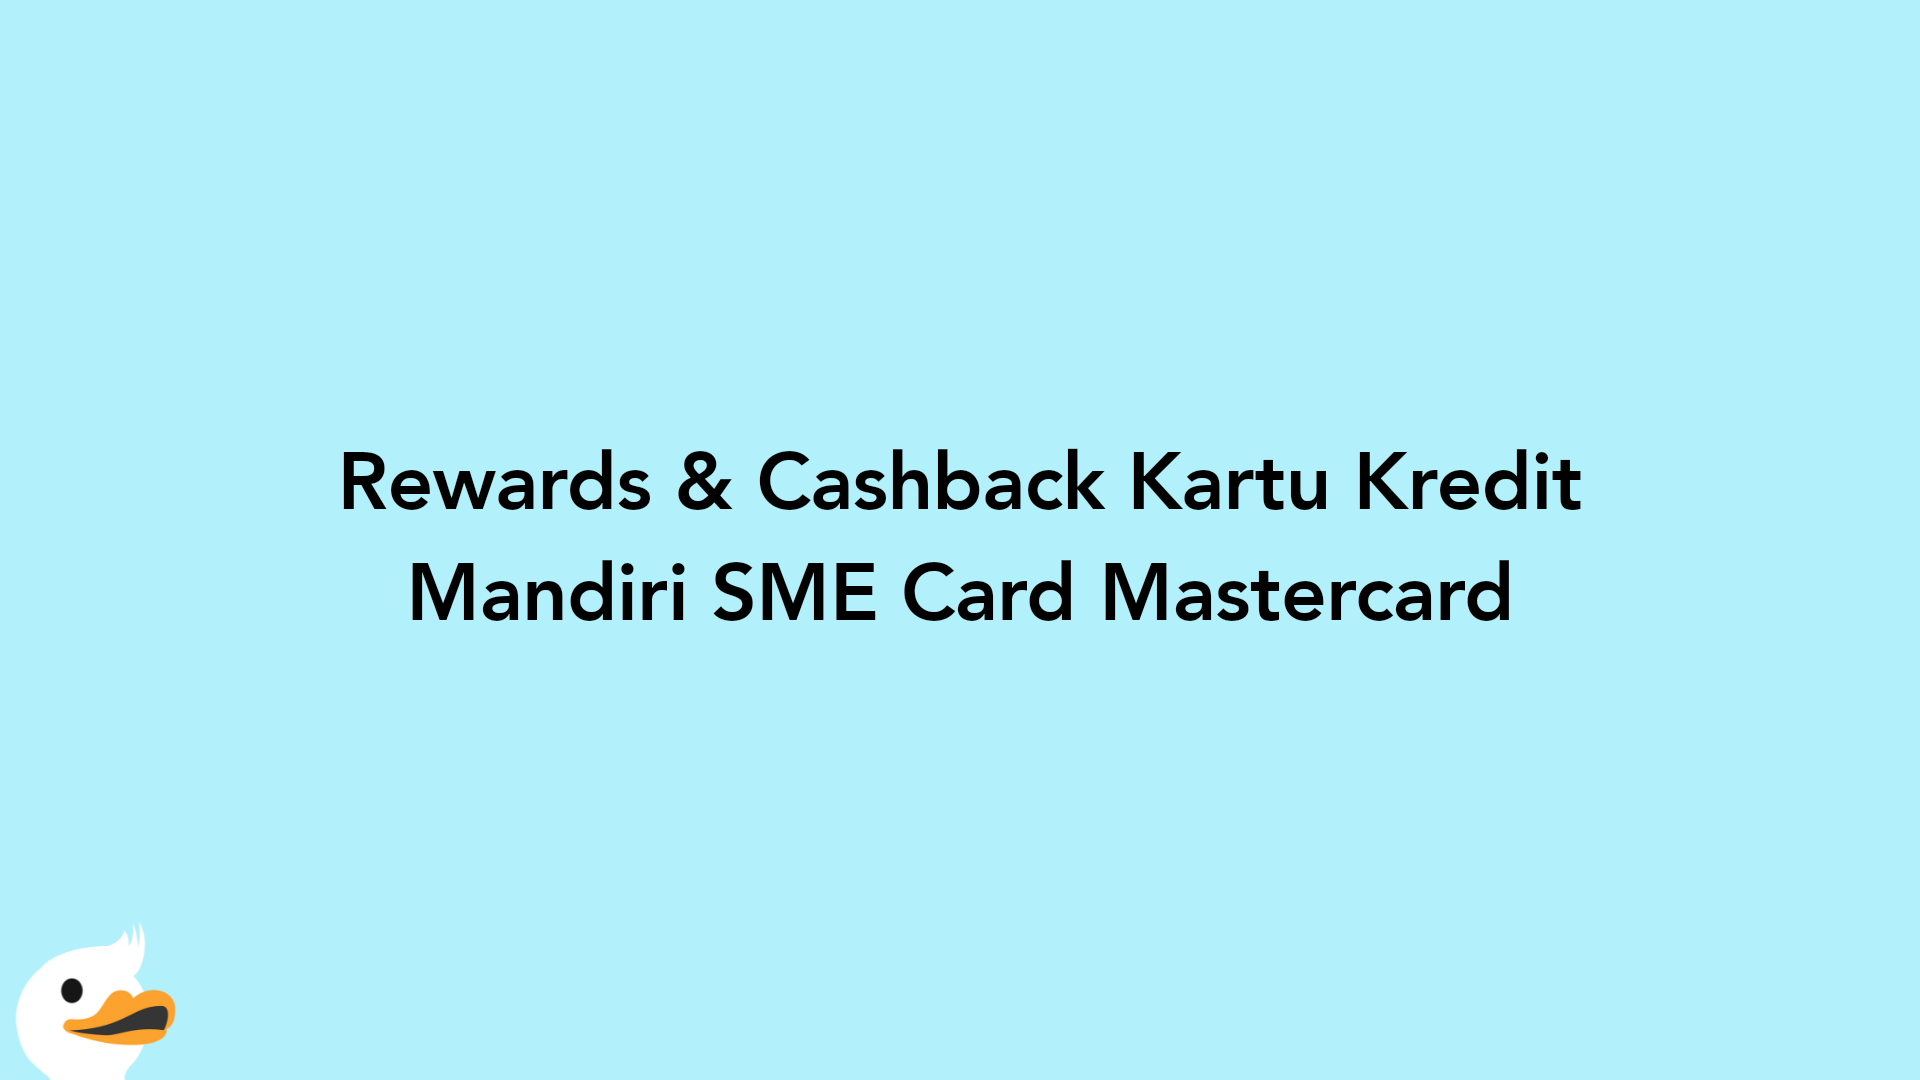 Rewards & Cashback Kartu Kredit Mandiri SME Card Mastercard